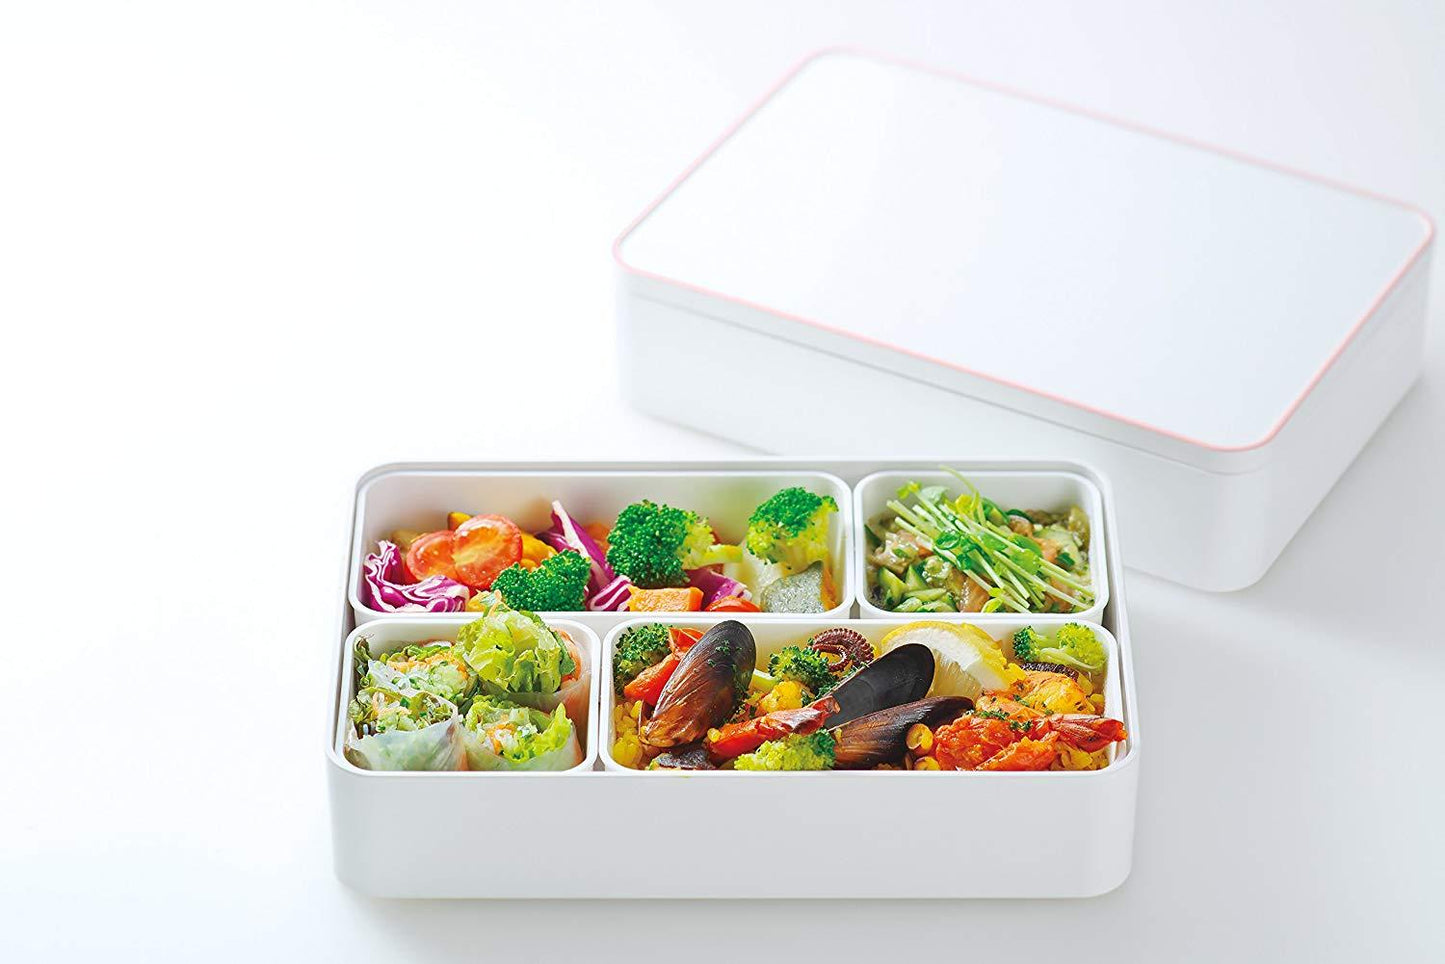 Irodori Shokado Bento Box | Green by Showa - Bento&co Japanese Bento Lunch Boxes and Kitchenware Specialists